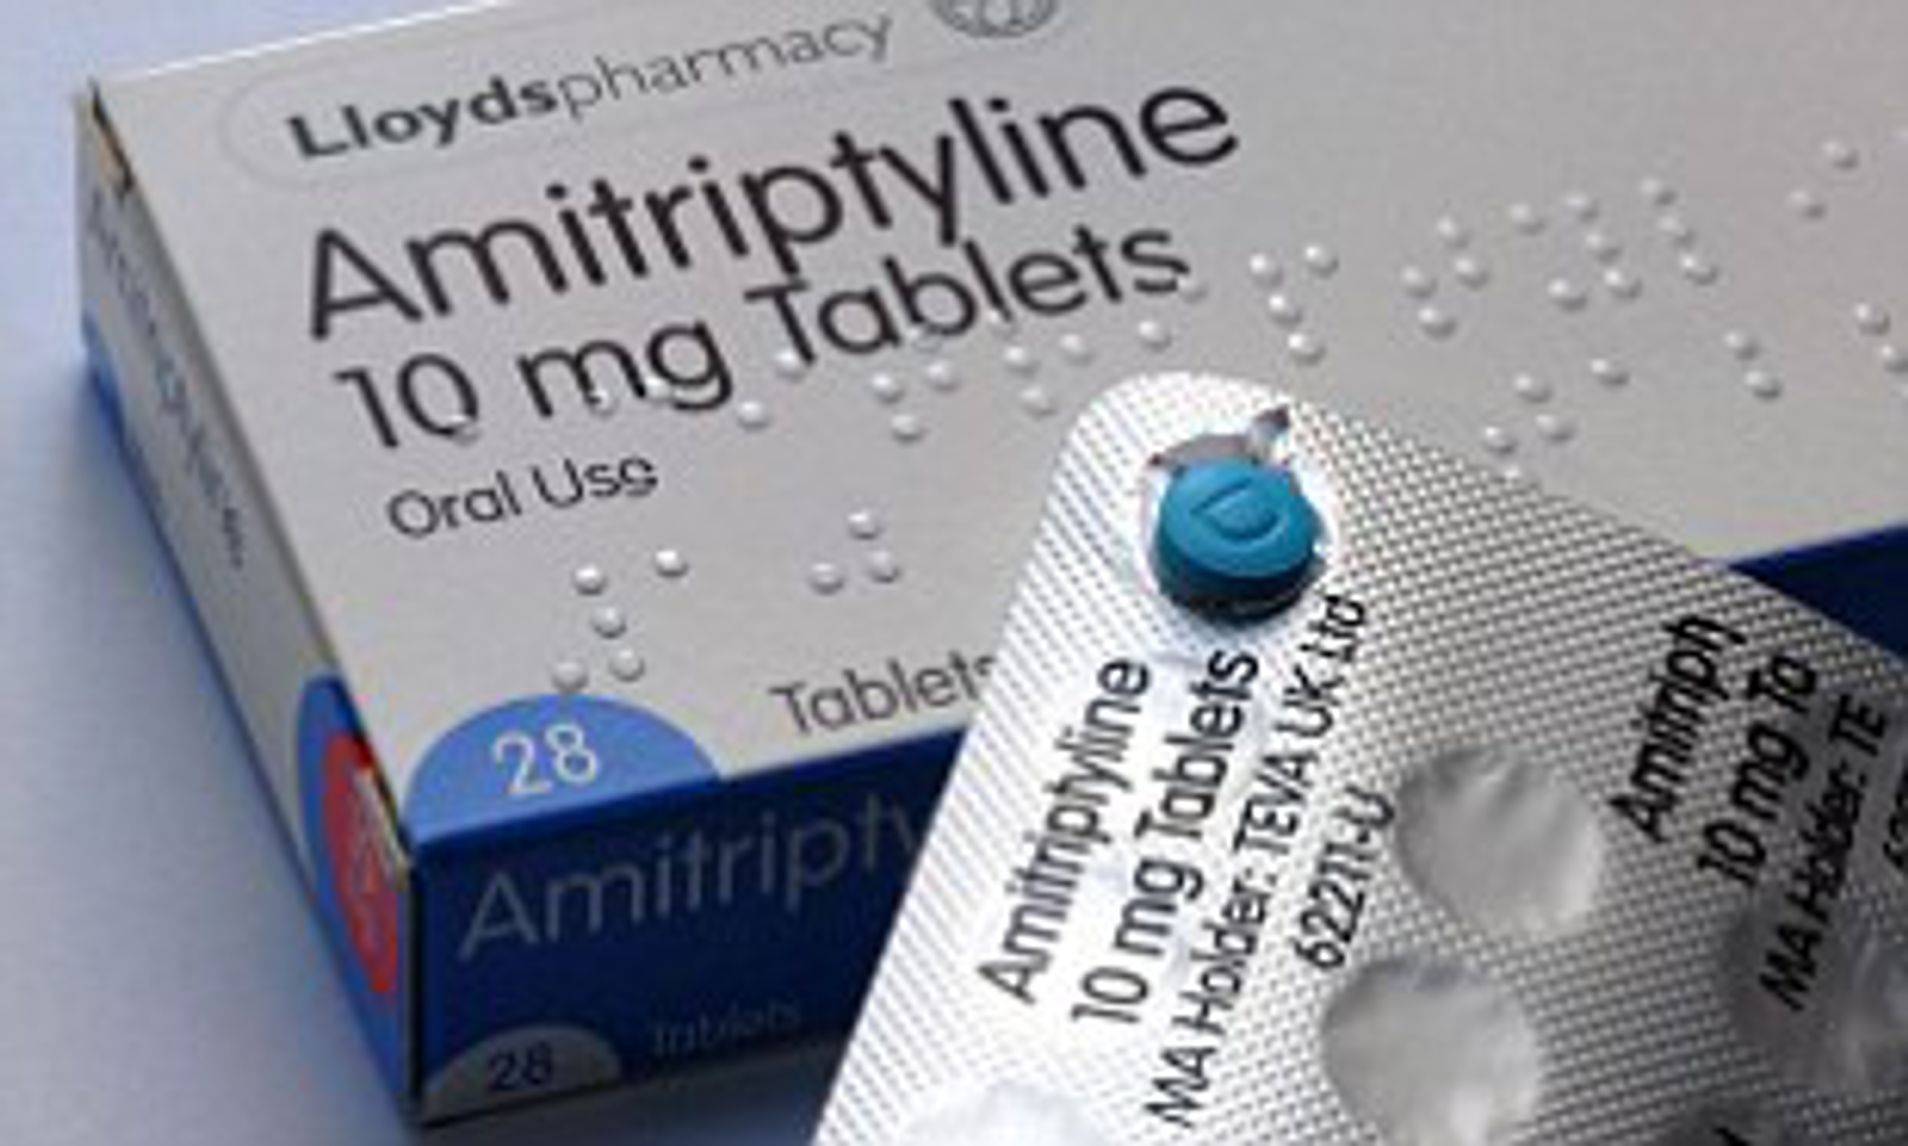 thuoc-amitriptyline-2